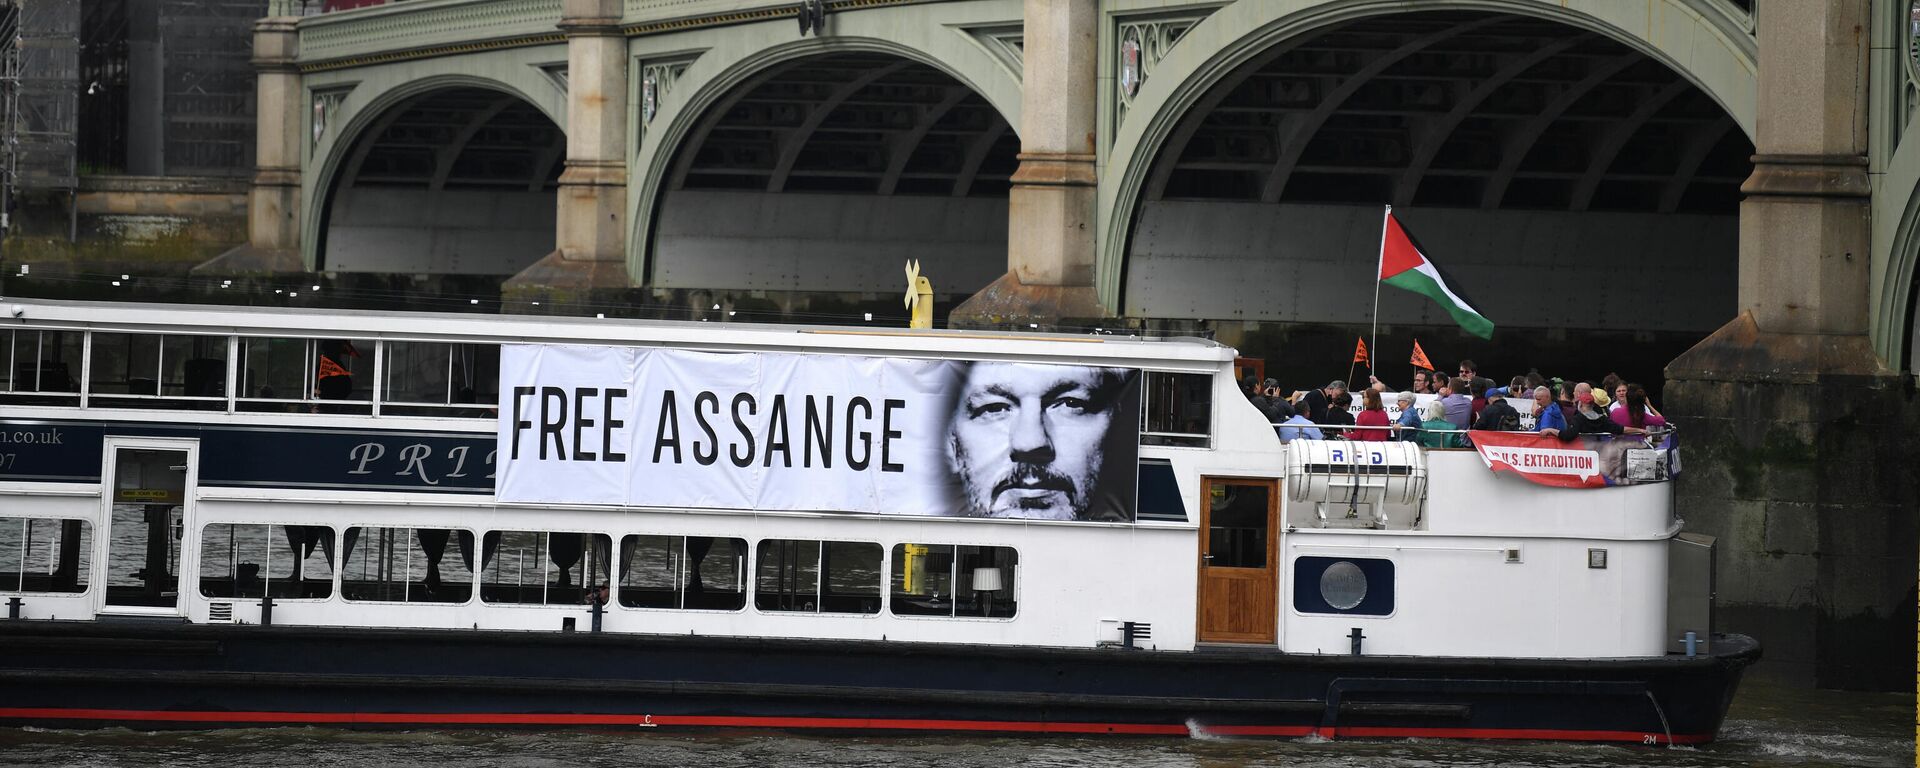 Un barco con una foto del fundador de Wikileaks, Julian Assange - Sputnik Mundo, 1920, 02.07.2021